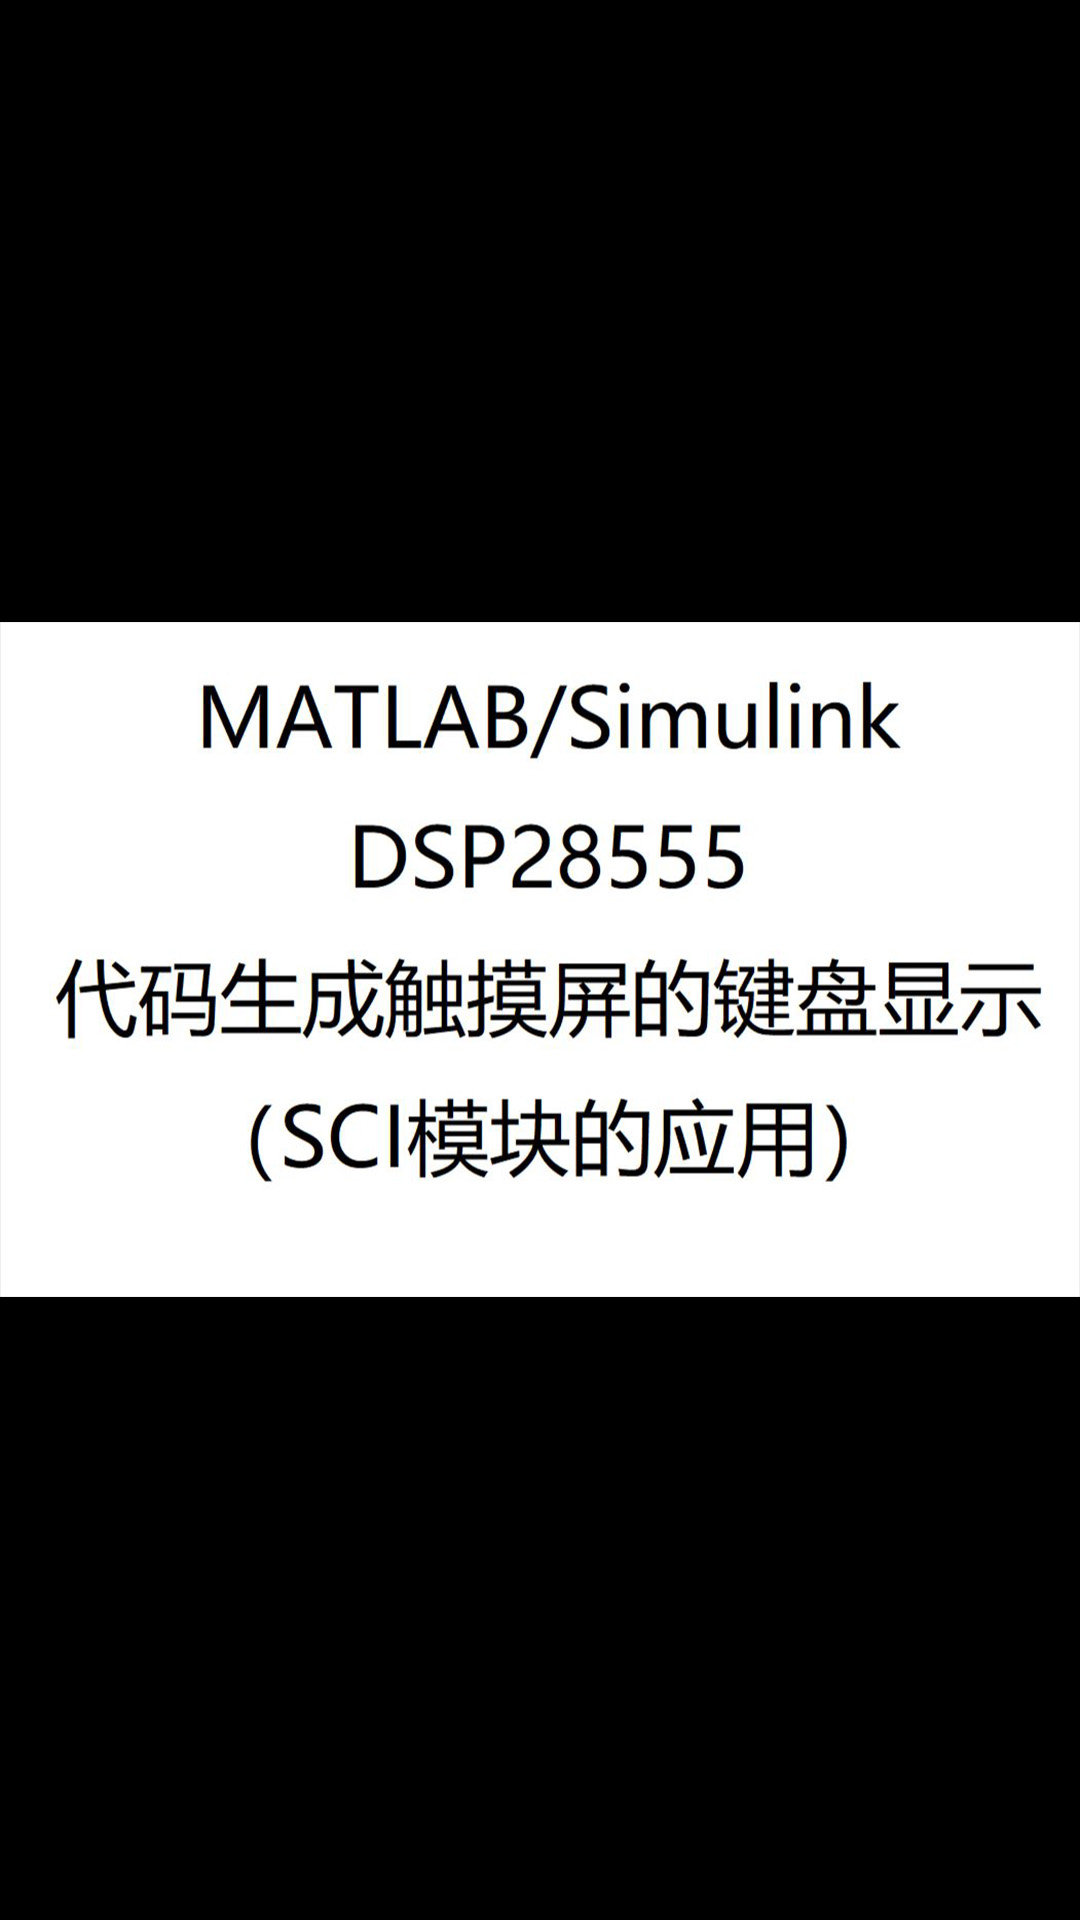 DSP28335代码生成触摸屏的键盘显示程序